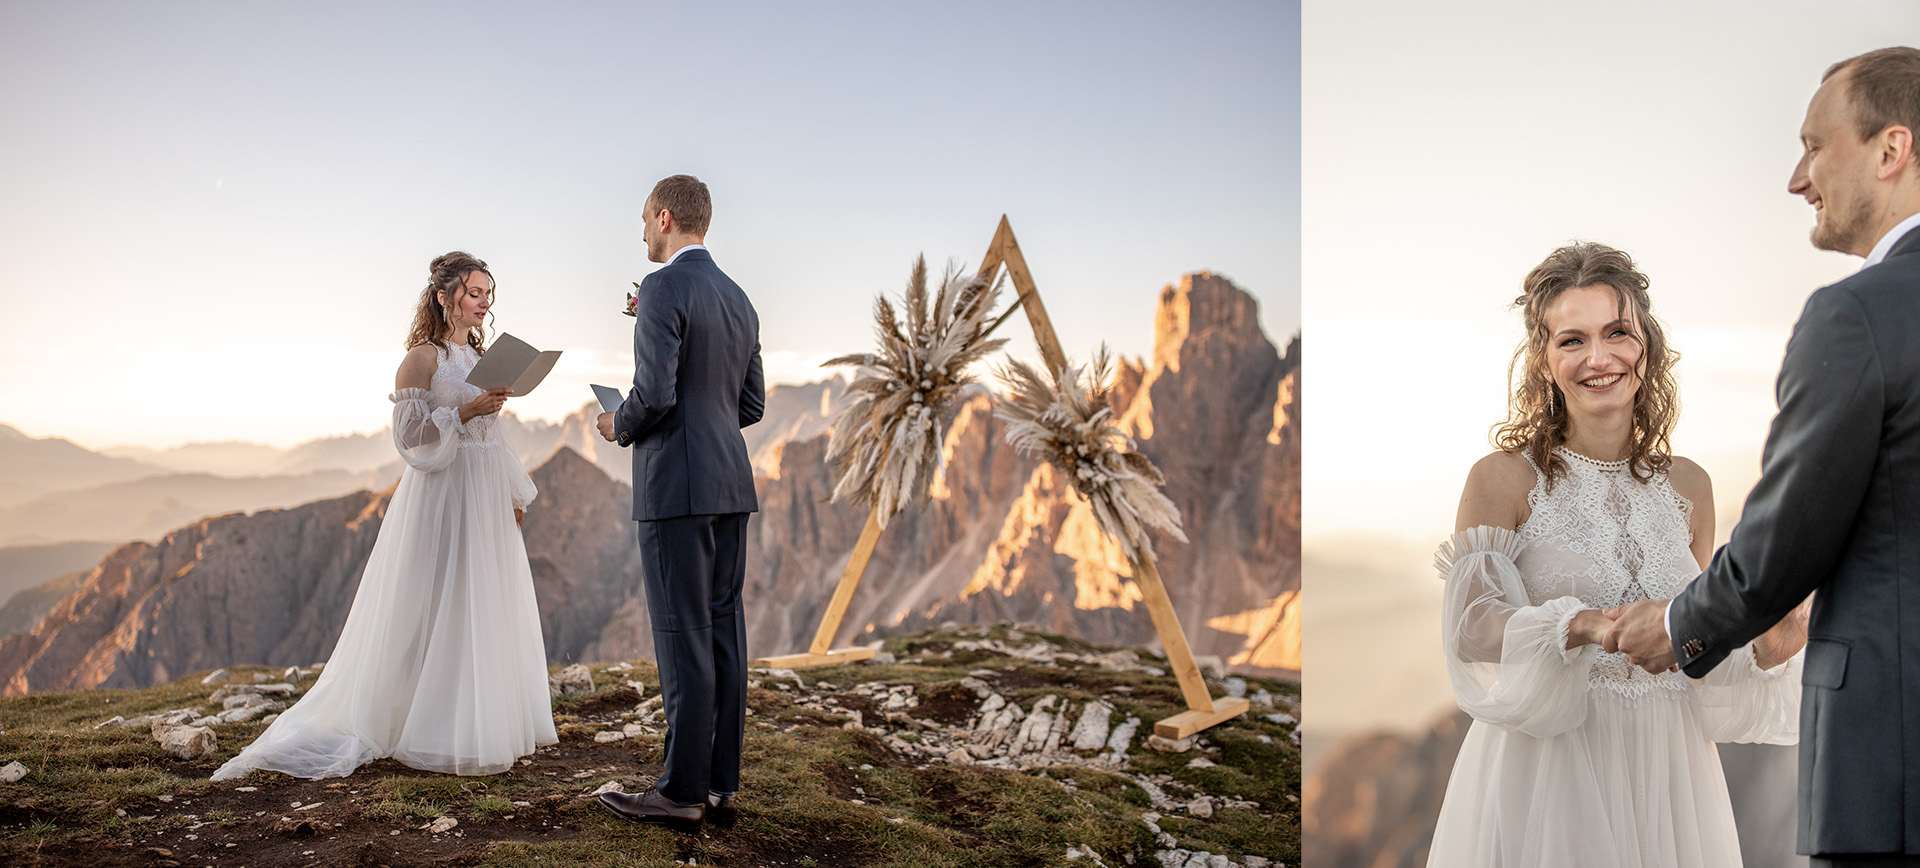 dolomites mountain elopement wedding in italy